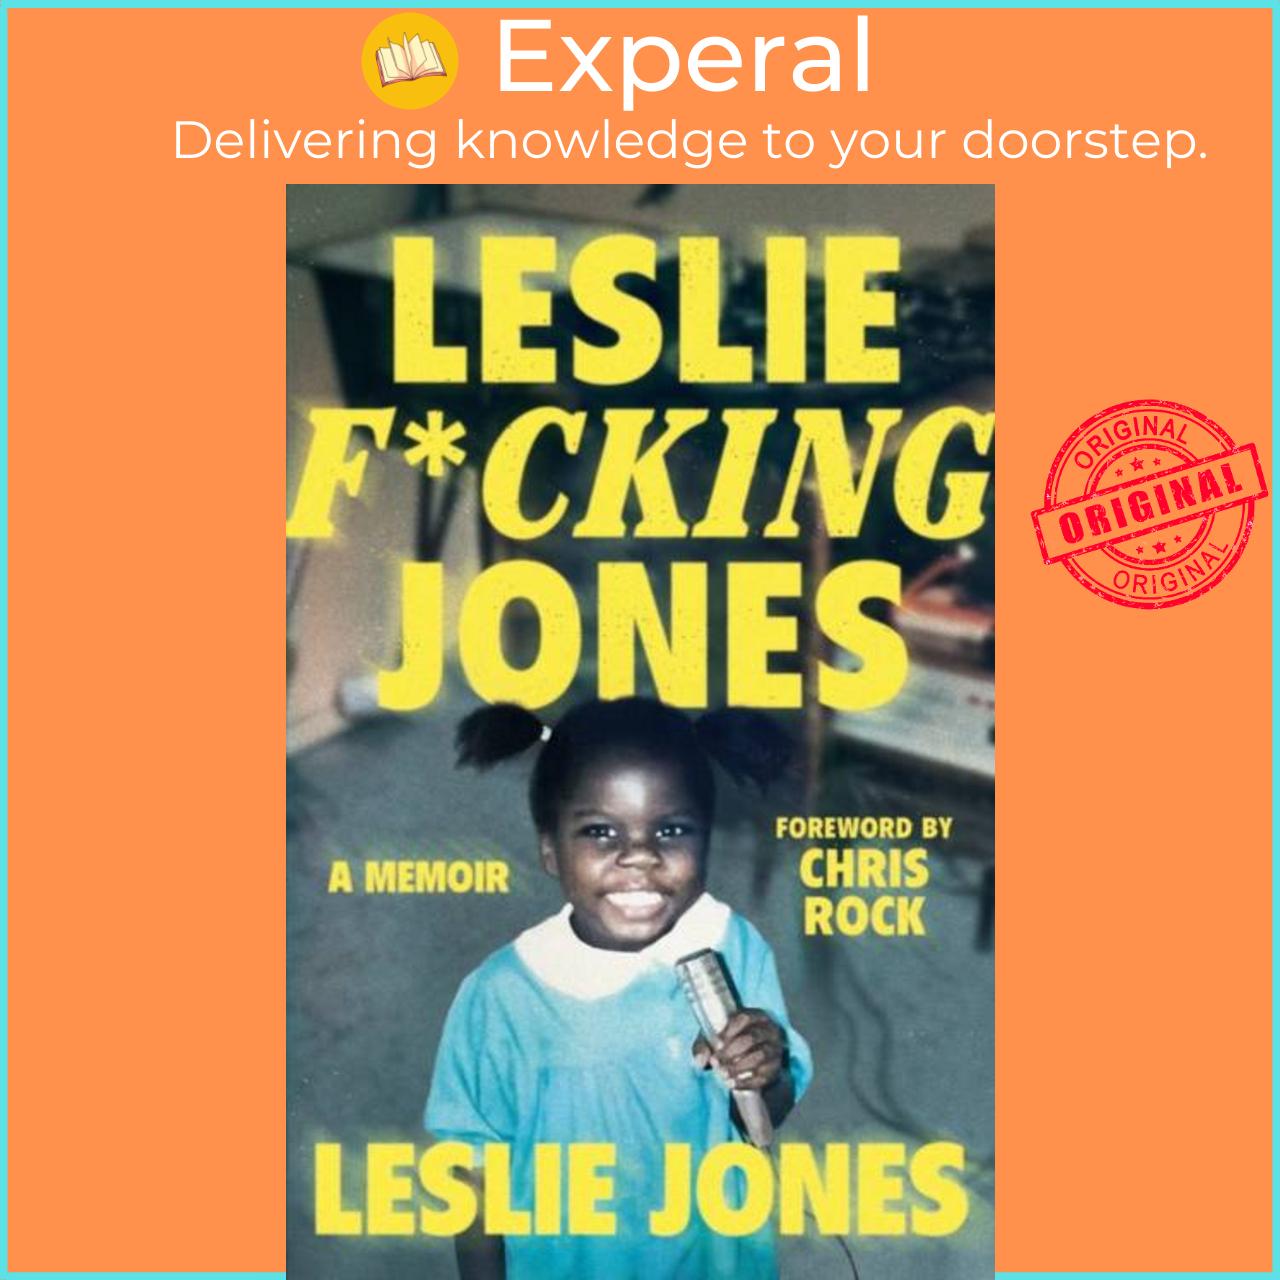 Sách - Leslie F*cking Jones - A Memoir by Leslie Jones (UK edition, hardcover)